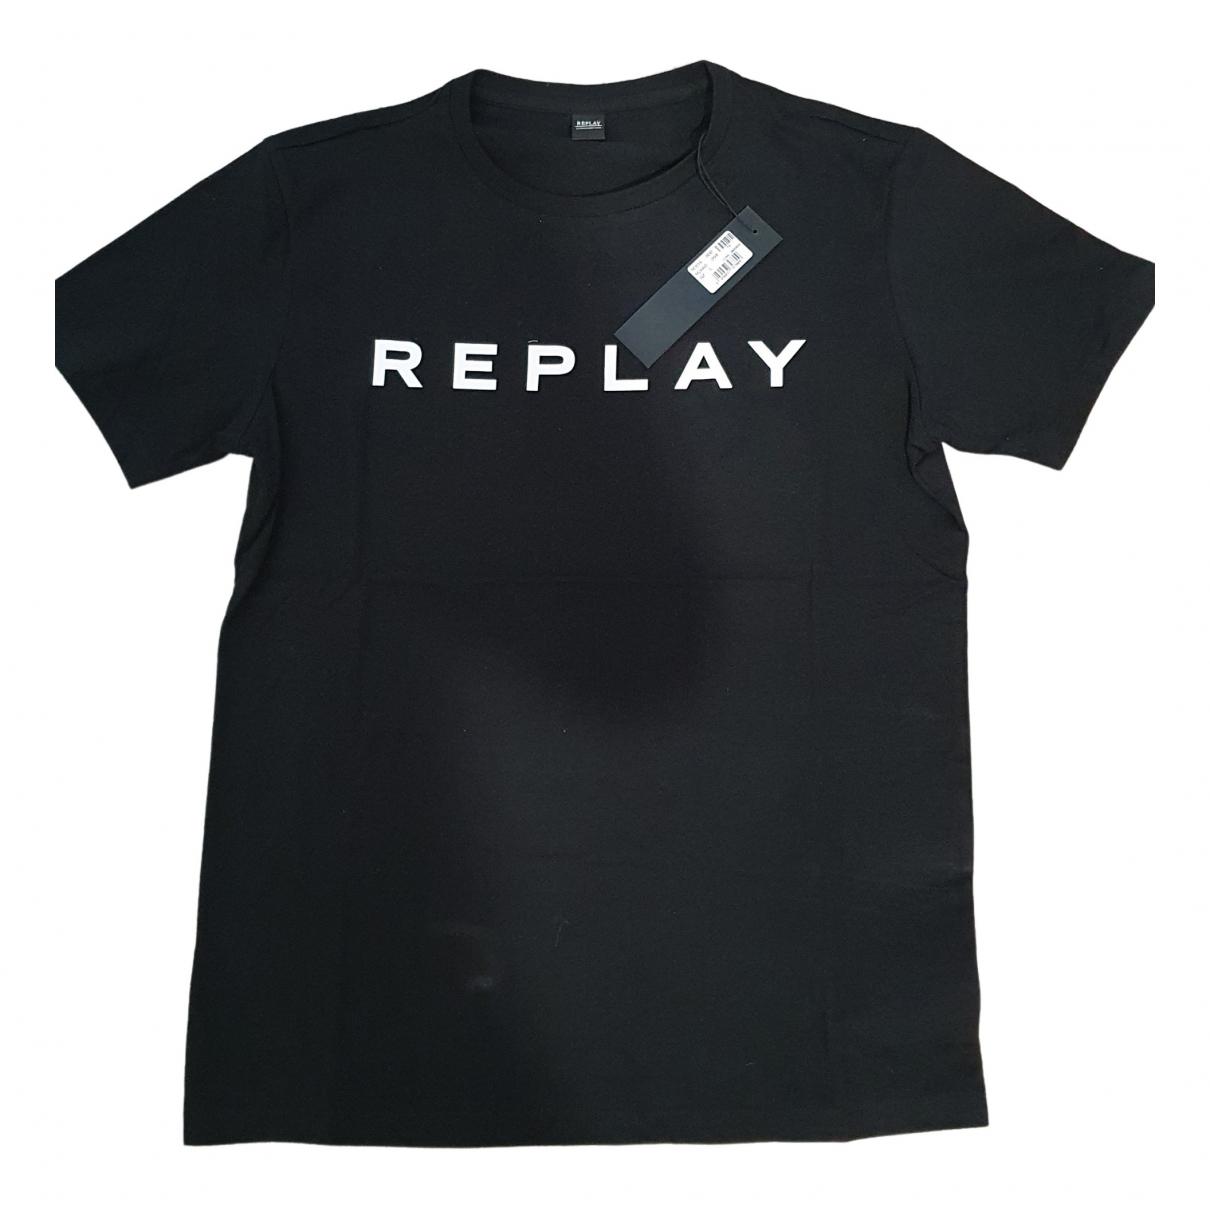 20499988 in XS - T-shirt Black International Cotton size Replay